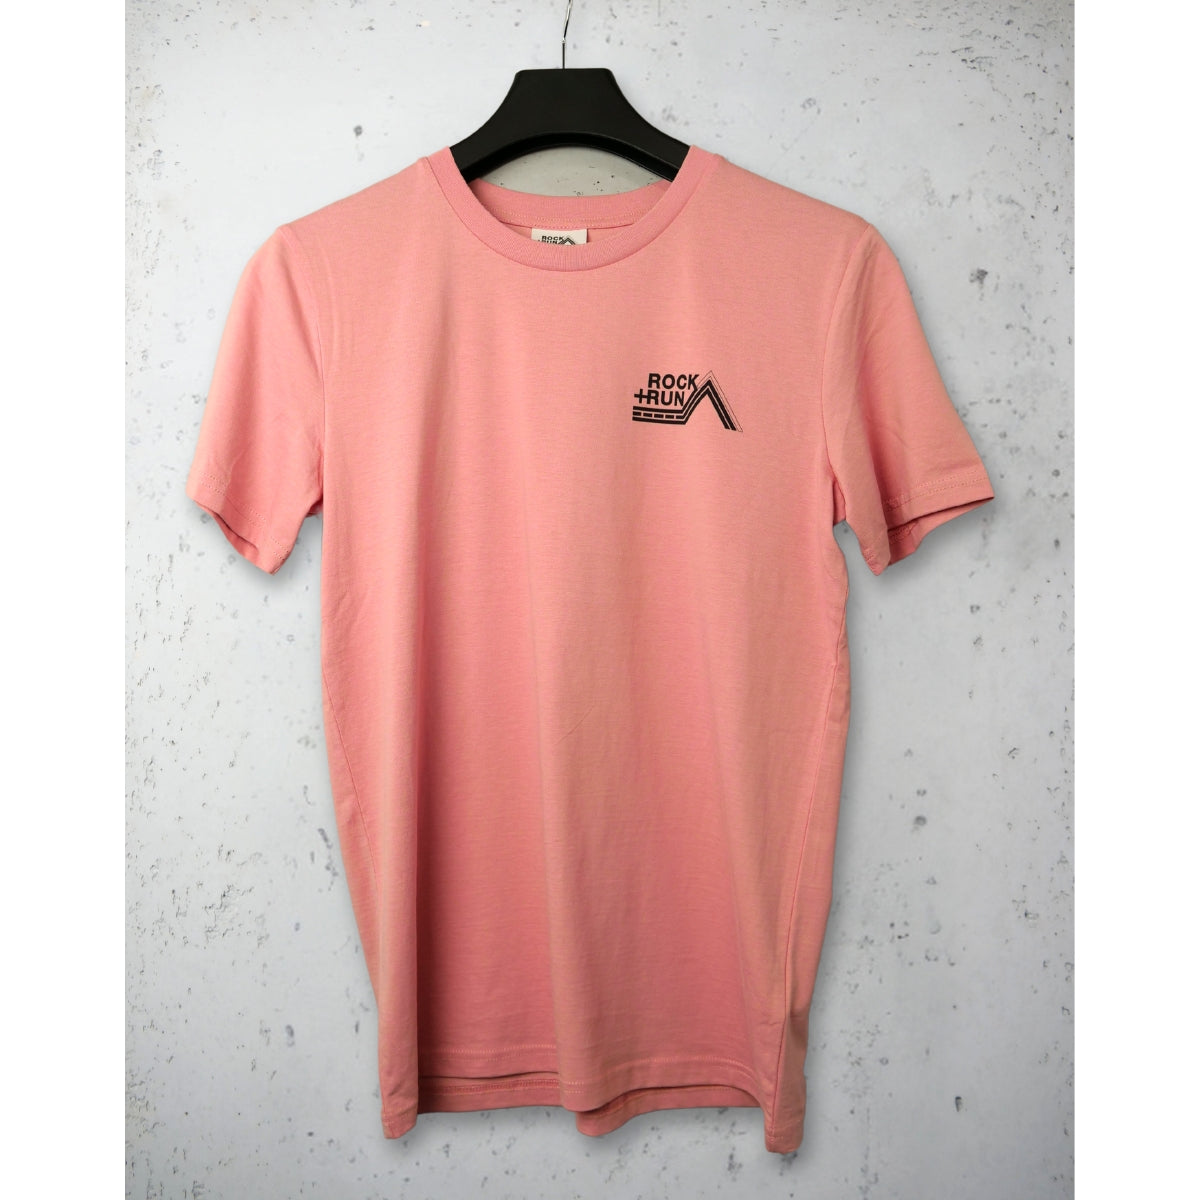 Rock+Run T-Shirt Front - Canyon Pink